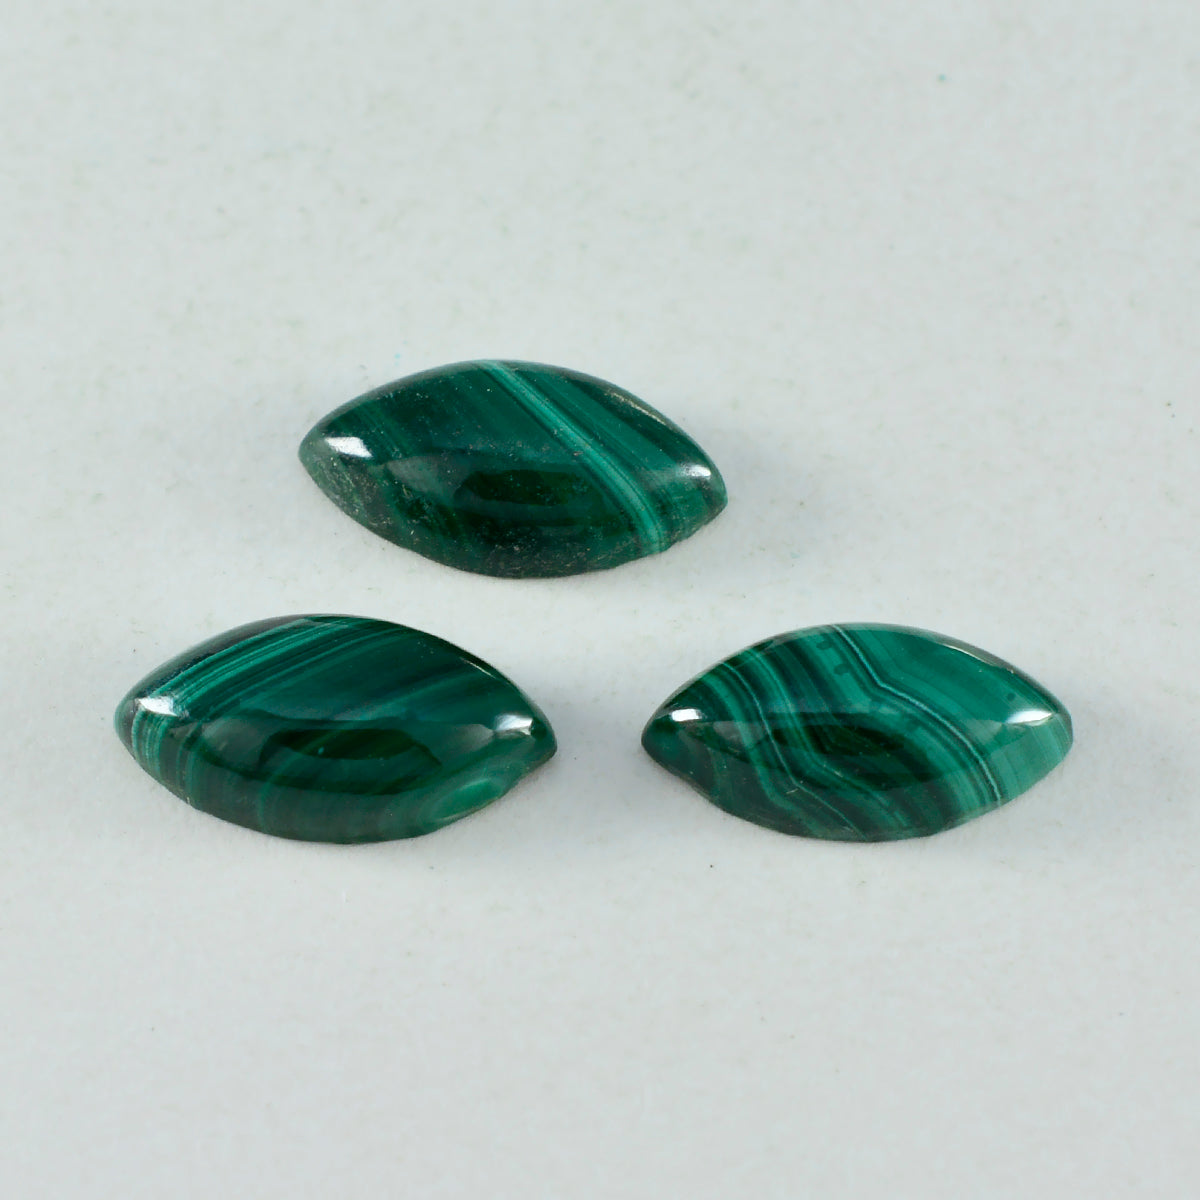 riyogems 1pc グリーン マラカイト カボション 9x18 mm マーキス シェイプ 素晴らしい品質のルース宝石